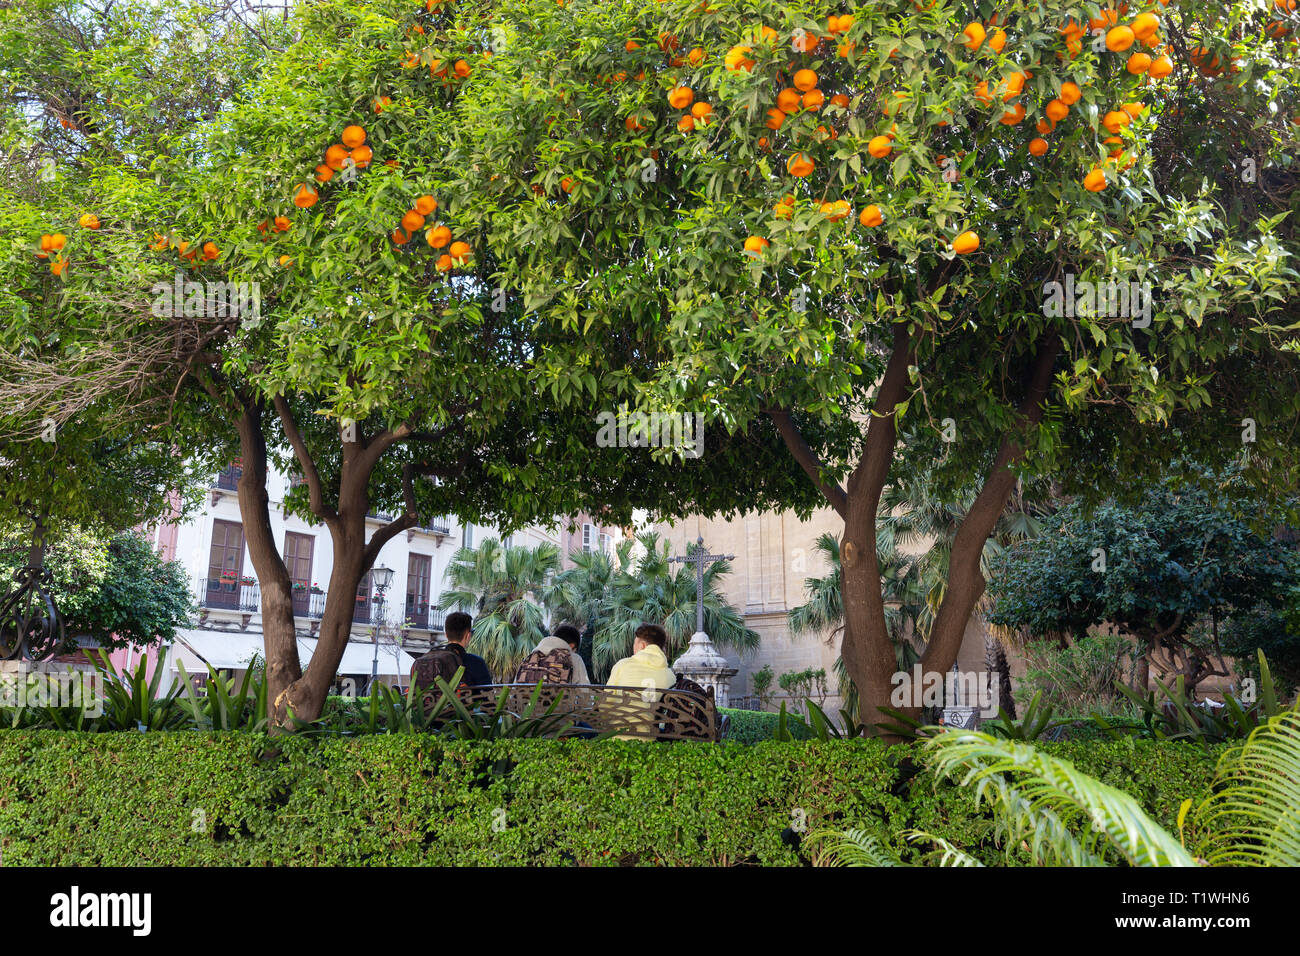 Orange trees Spain - - oranges growing on orange trees in Malaga city centre, Malaga Andalusia Spain Stock Photo